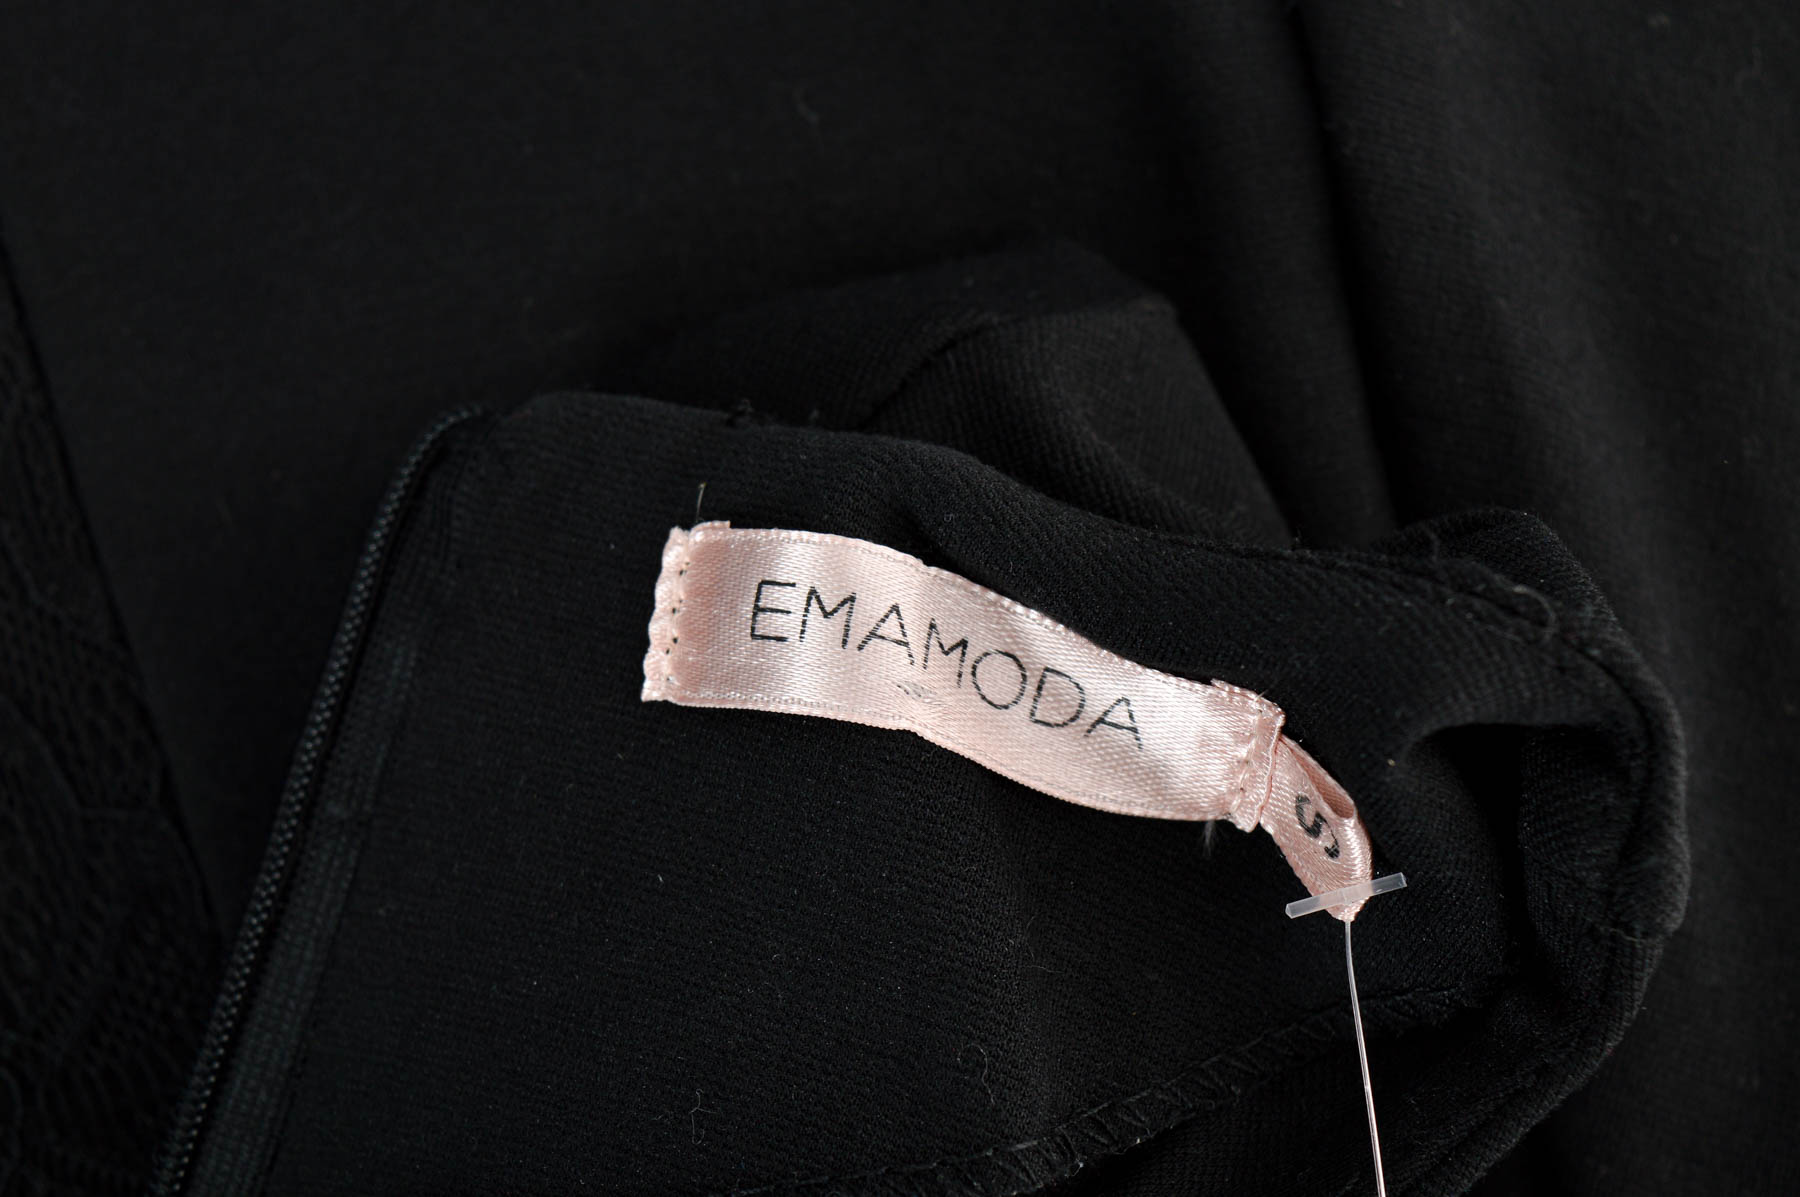 Dress - Emamoda - 2